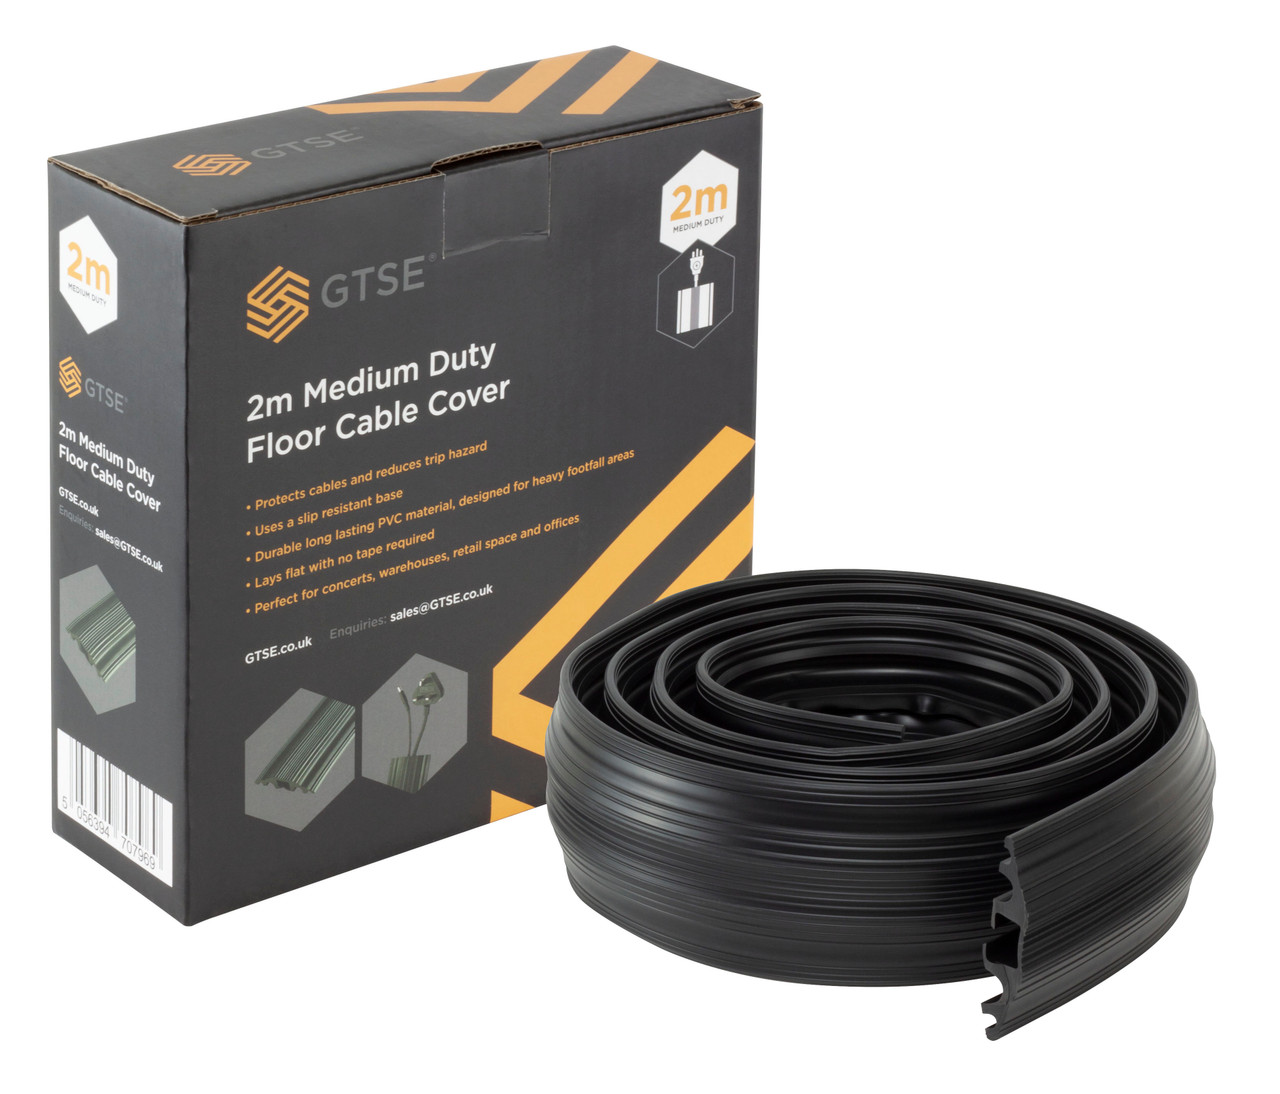 GTSE Floor Cable Cover - Medium Duty 2m